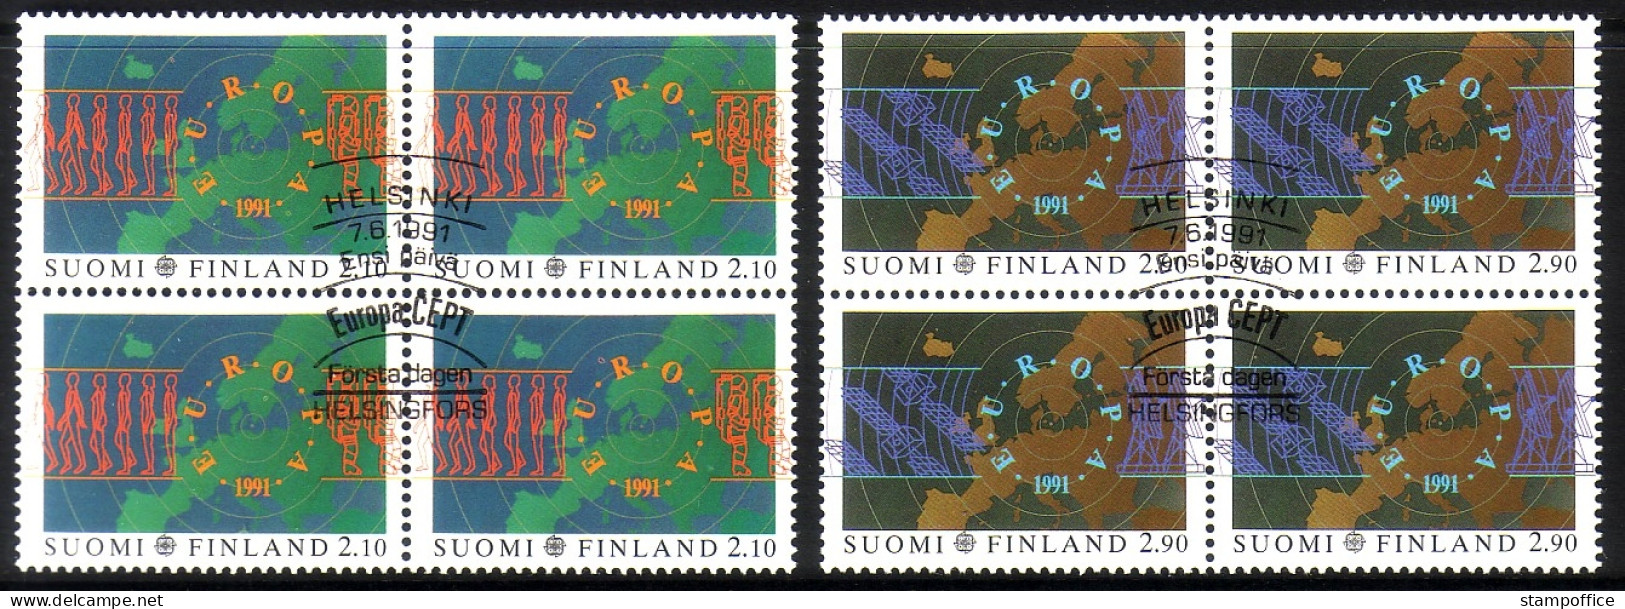 FINNLAND MI-NR. 1144-1145 O 4er BLOCK EUROPA 1991 - EUROPÄISCHE WELTRAUMFAHRT SATELLIT - 1991